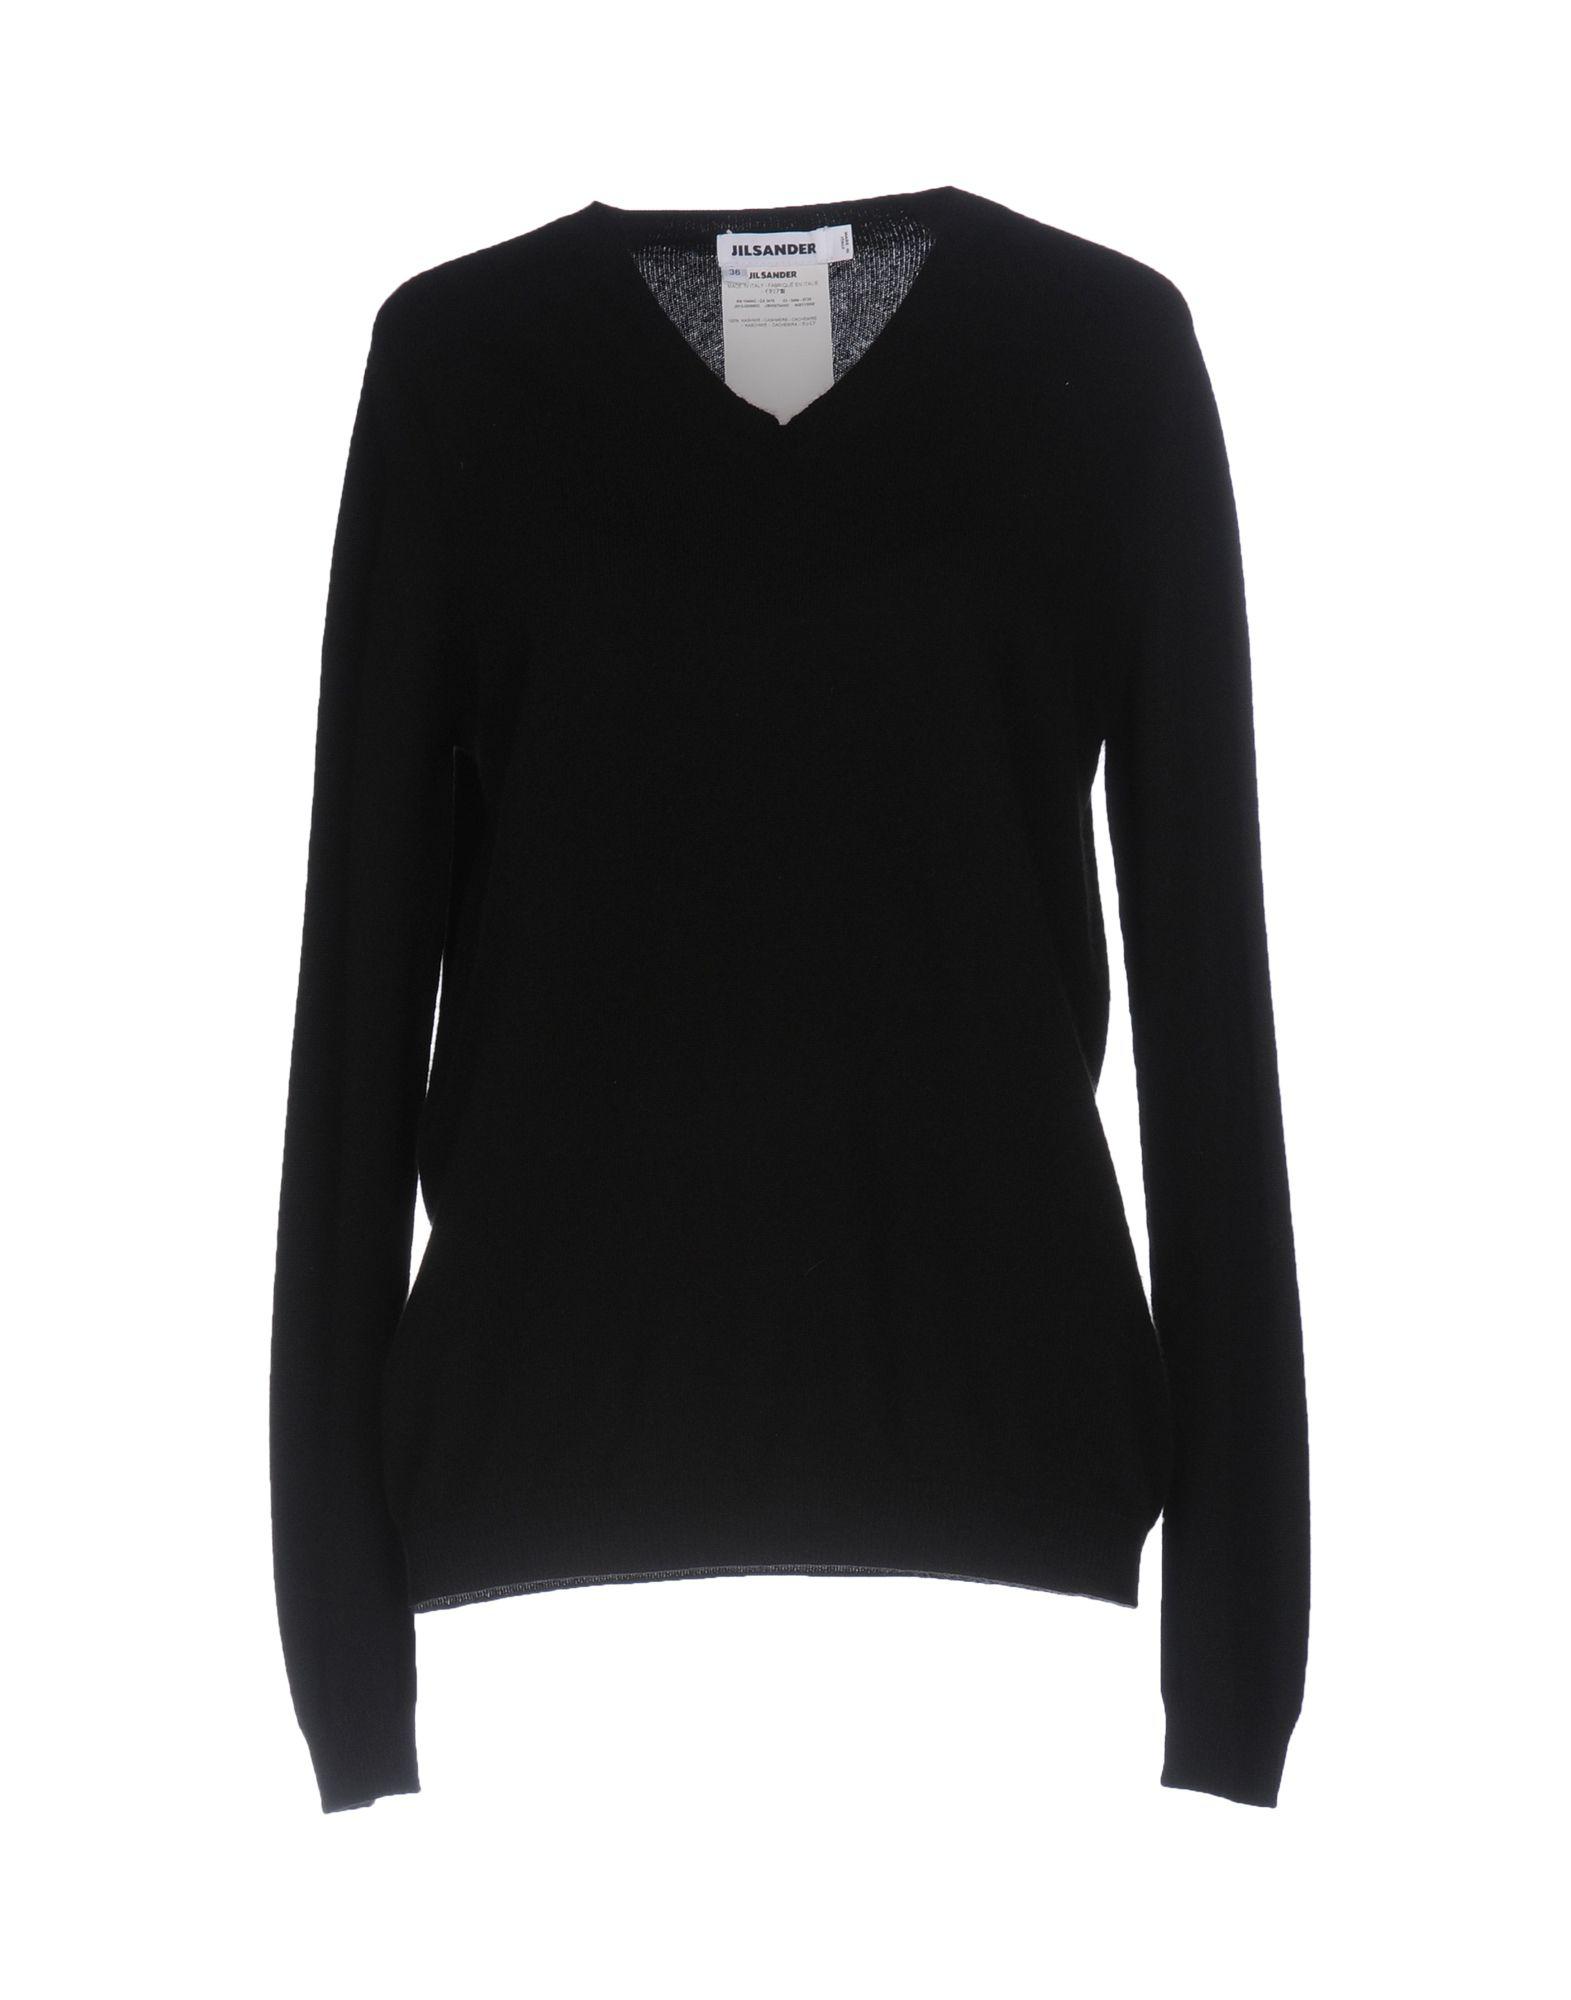 Jil Sander Cashmere Sweater in Black - Lyst